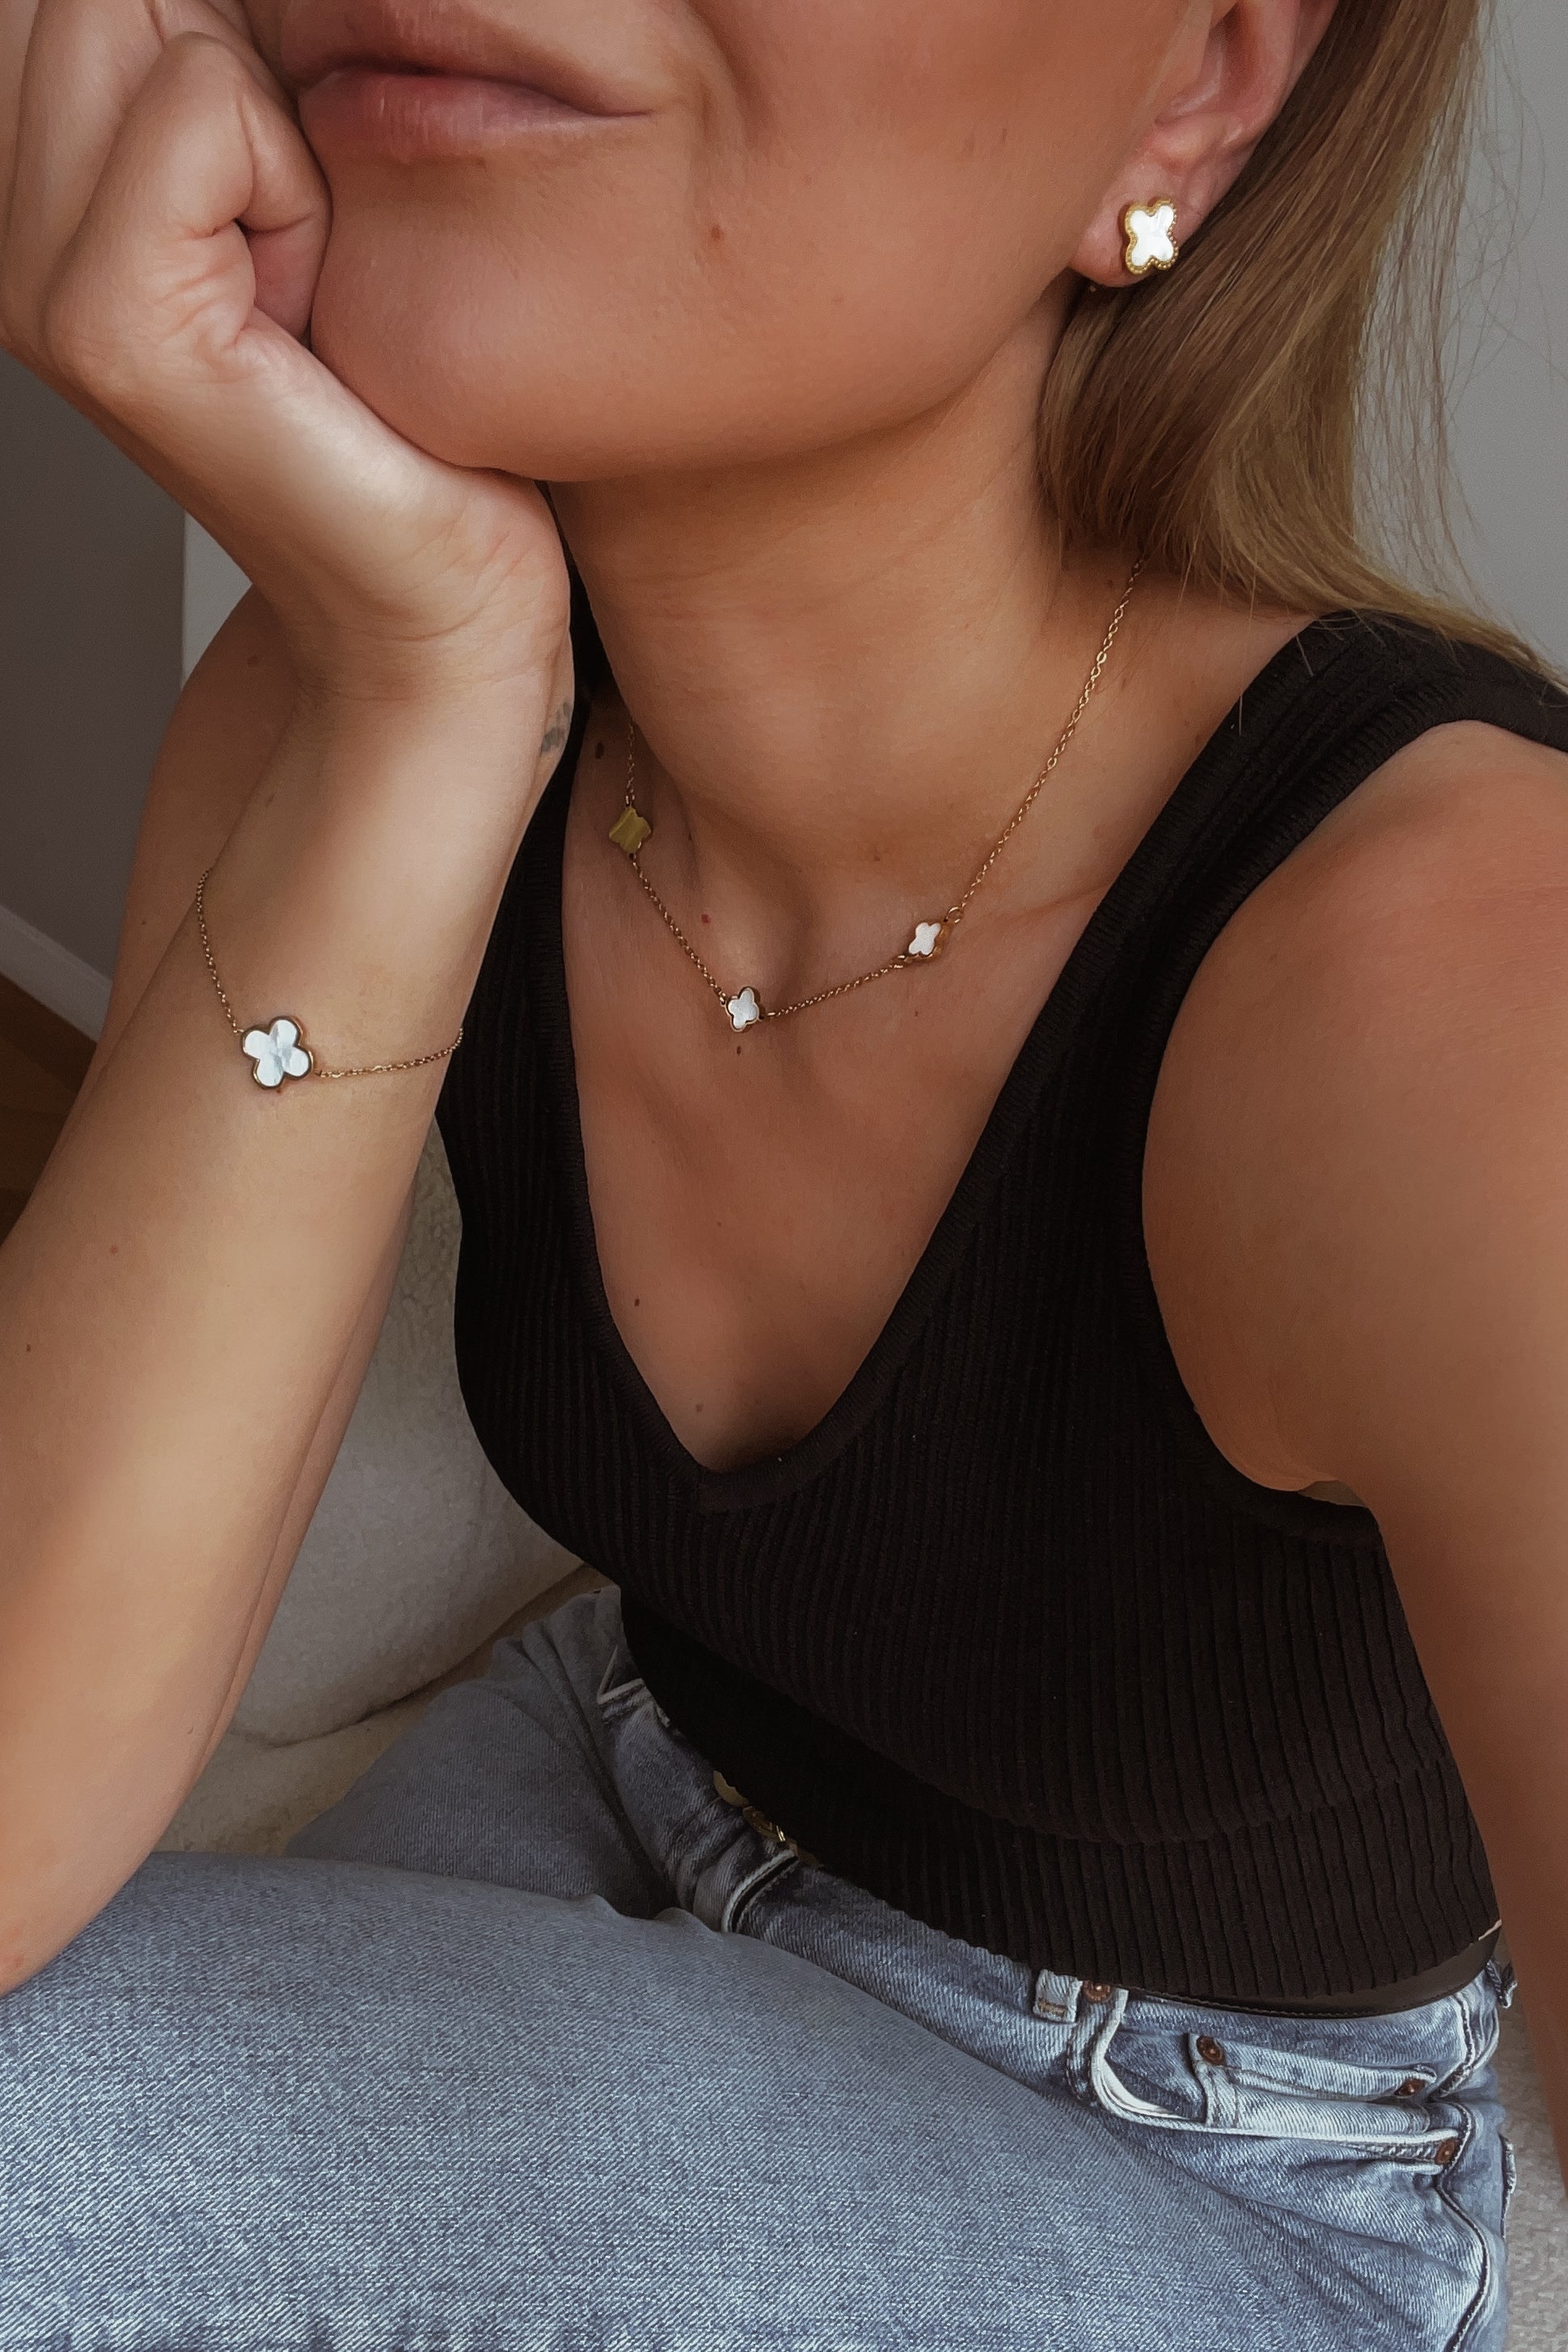 Xami Bracelet - Boutique Minimaliste has waterproof, durable, elegant and vintage inspired jewelry